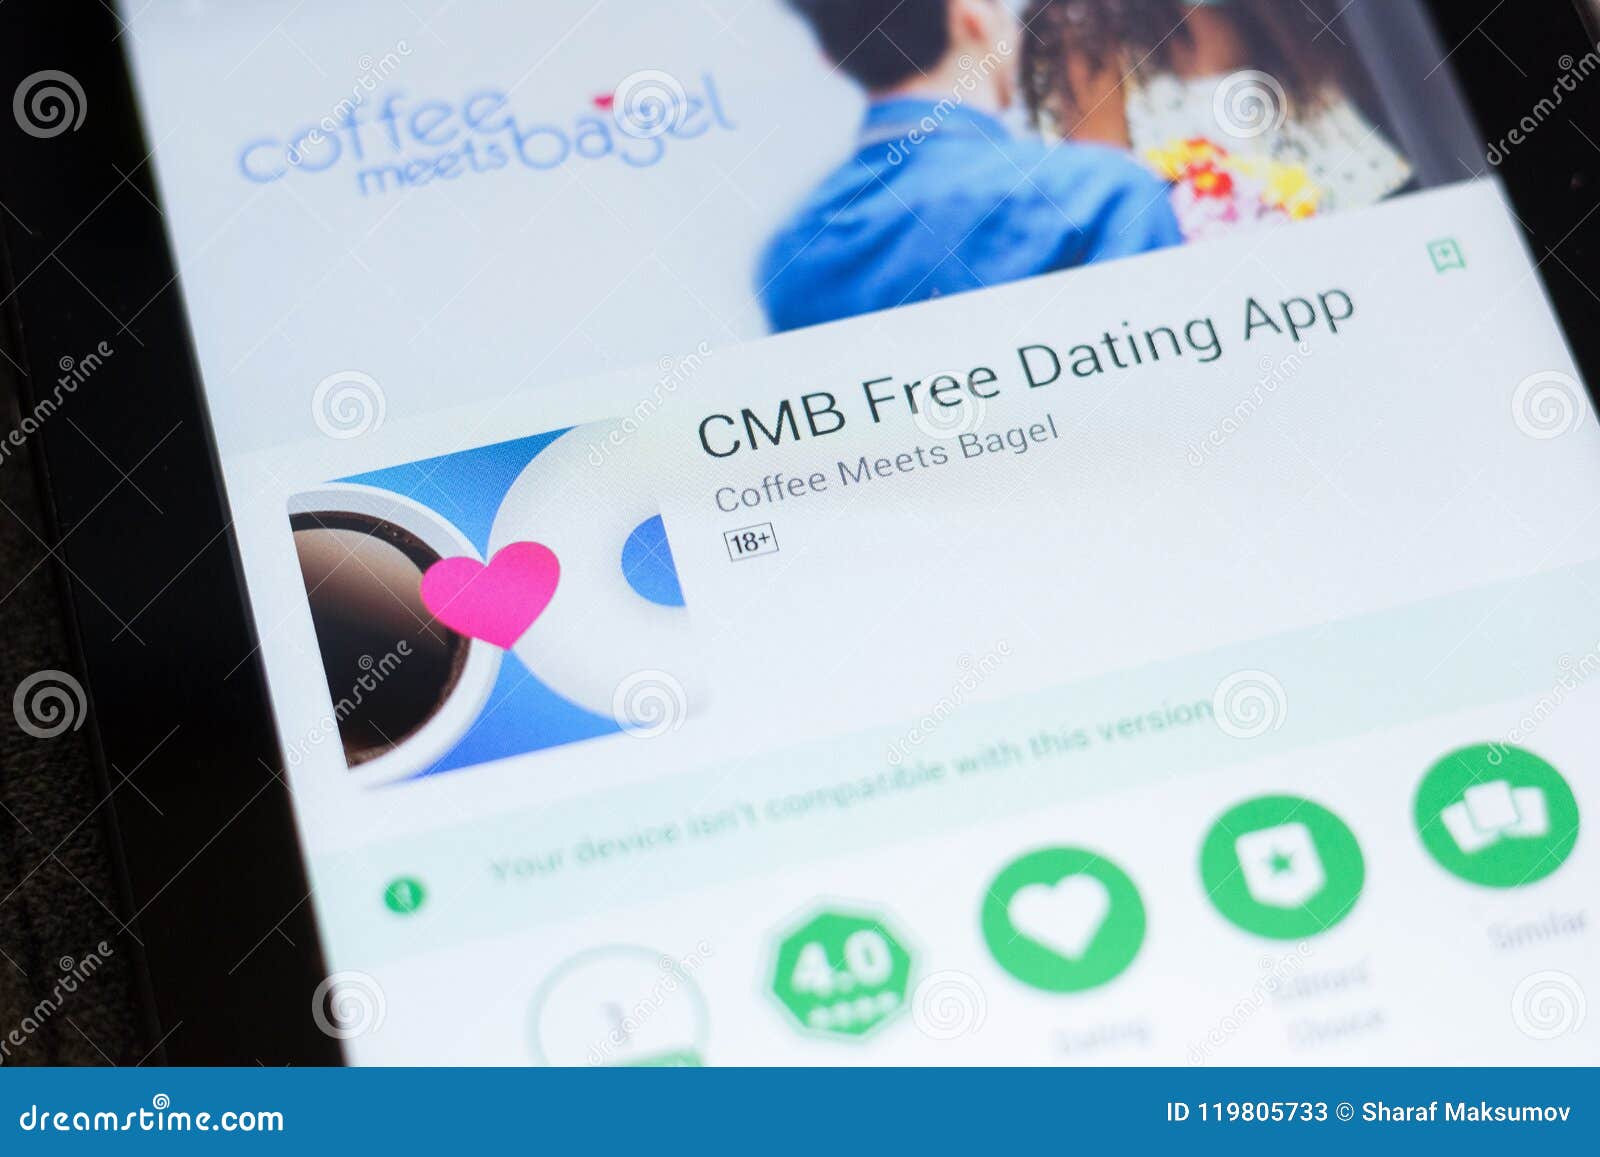 Bbw mobile dating app